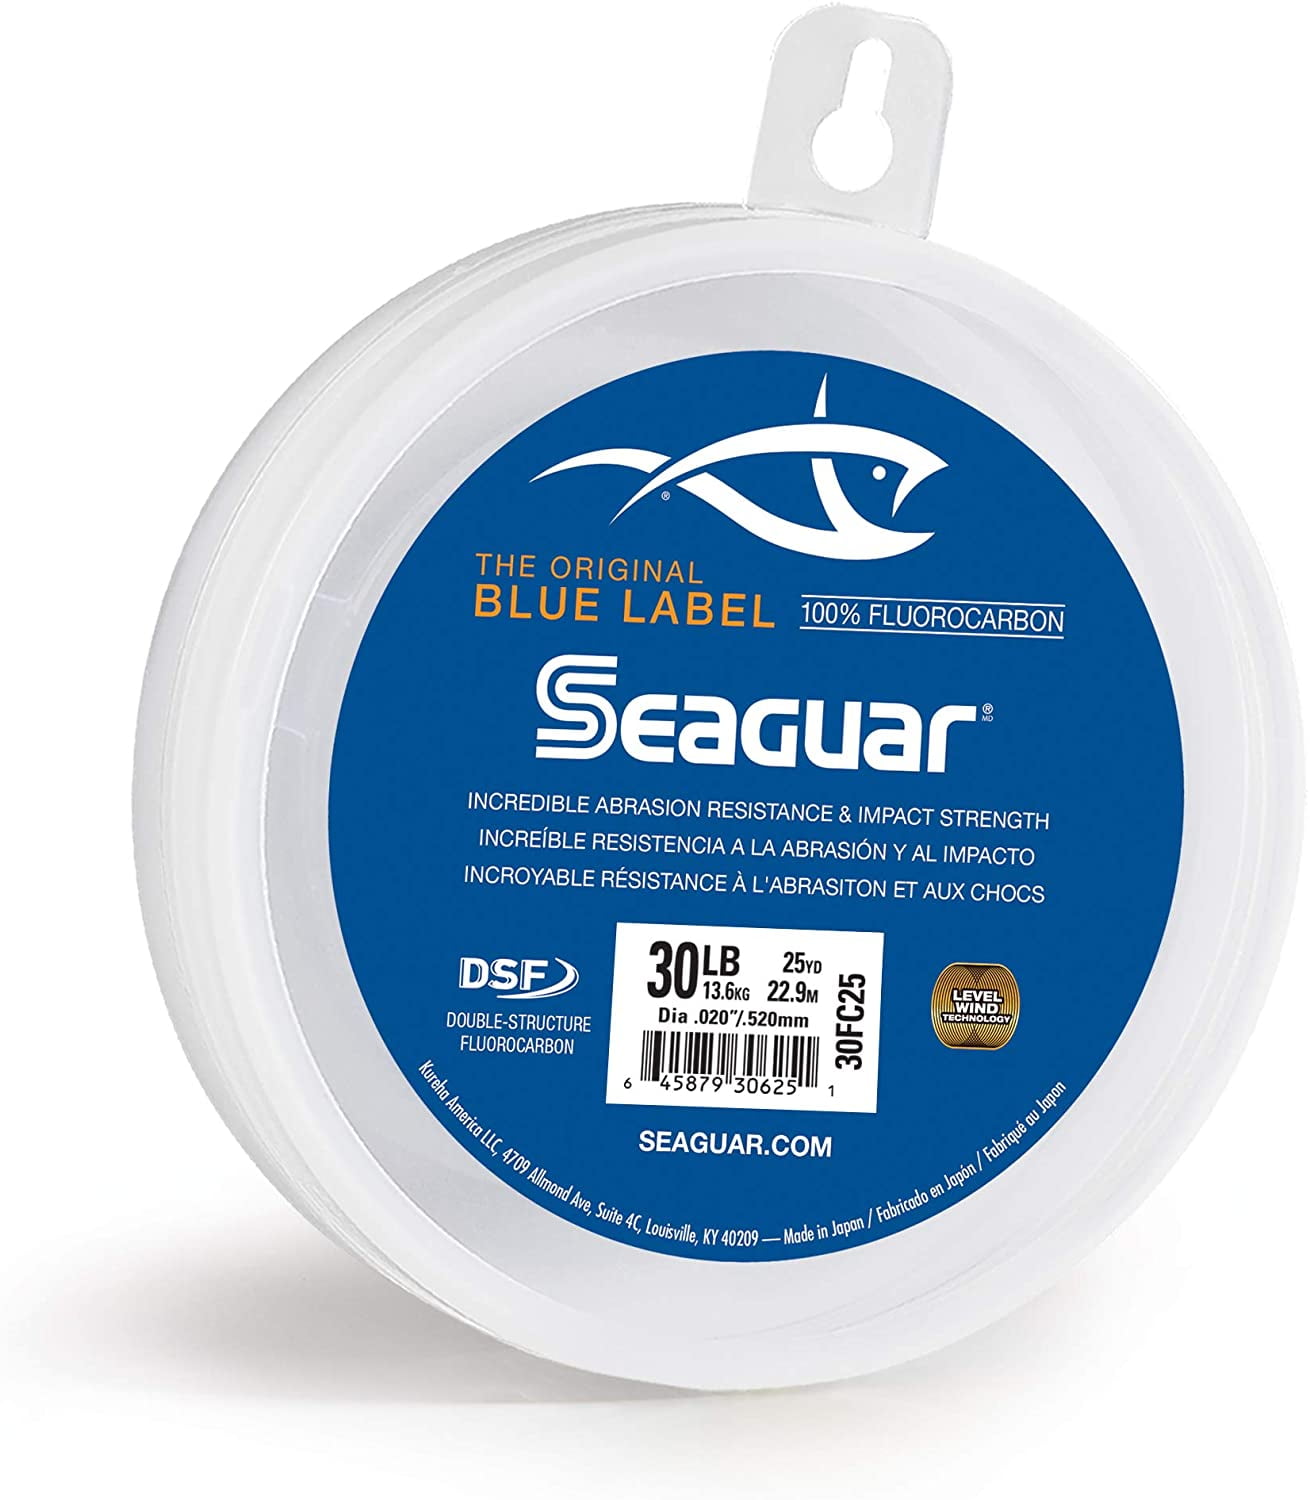 Seaguar Blue Label 100% Fluorocarbon Leader Material 25yd 